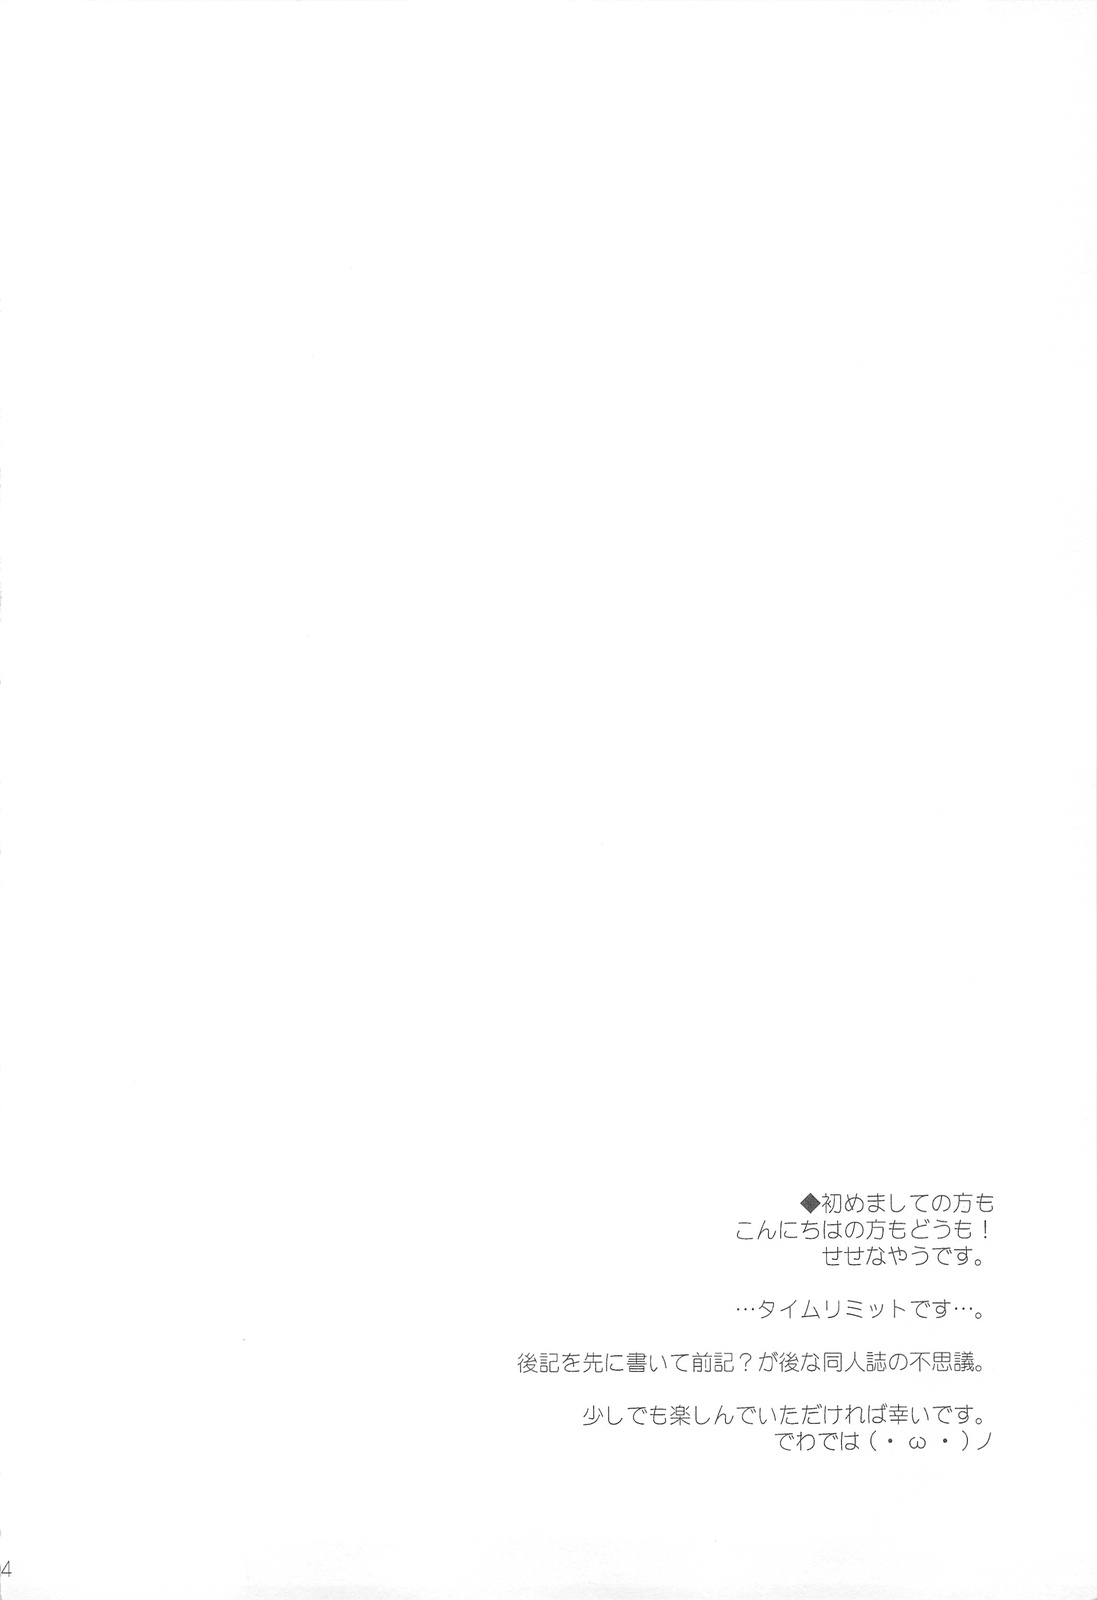 [KOKIKKO] Chain (Hayate no Gotoku) (C75) 